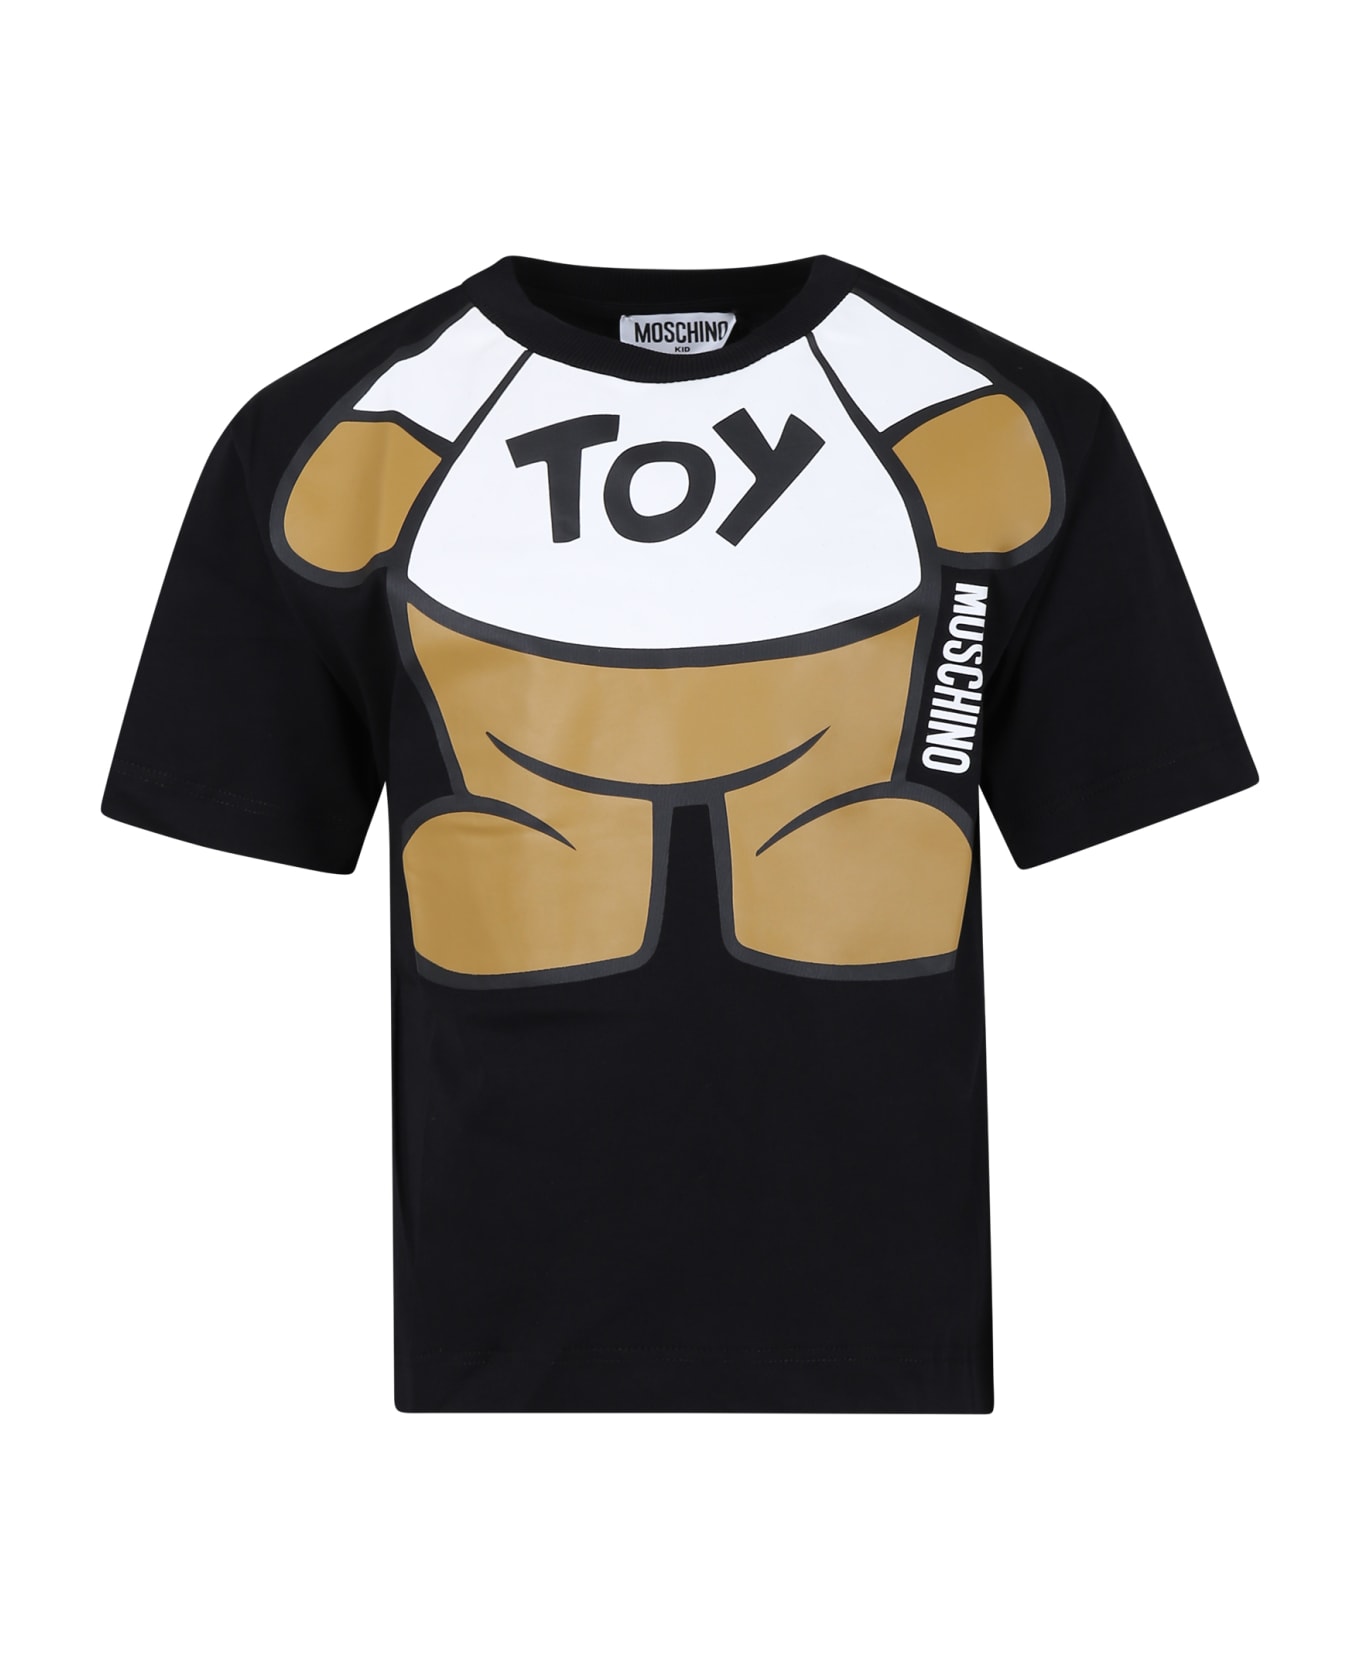 Moschino Black T-shirt For Boy With Teddy Bear - Nero